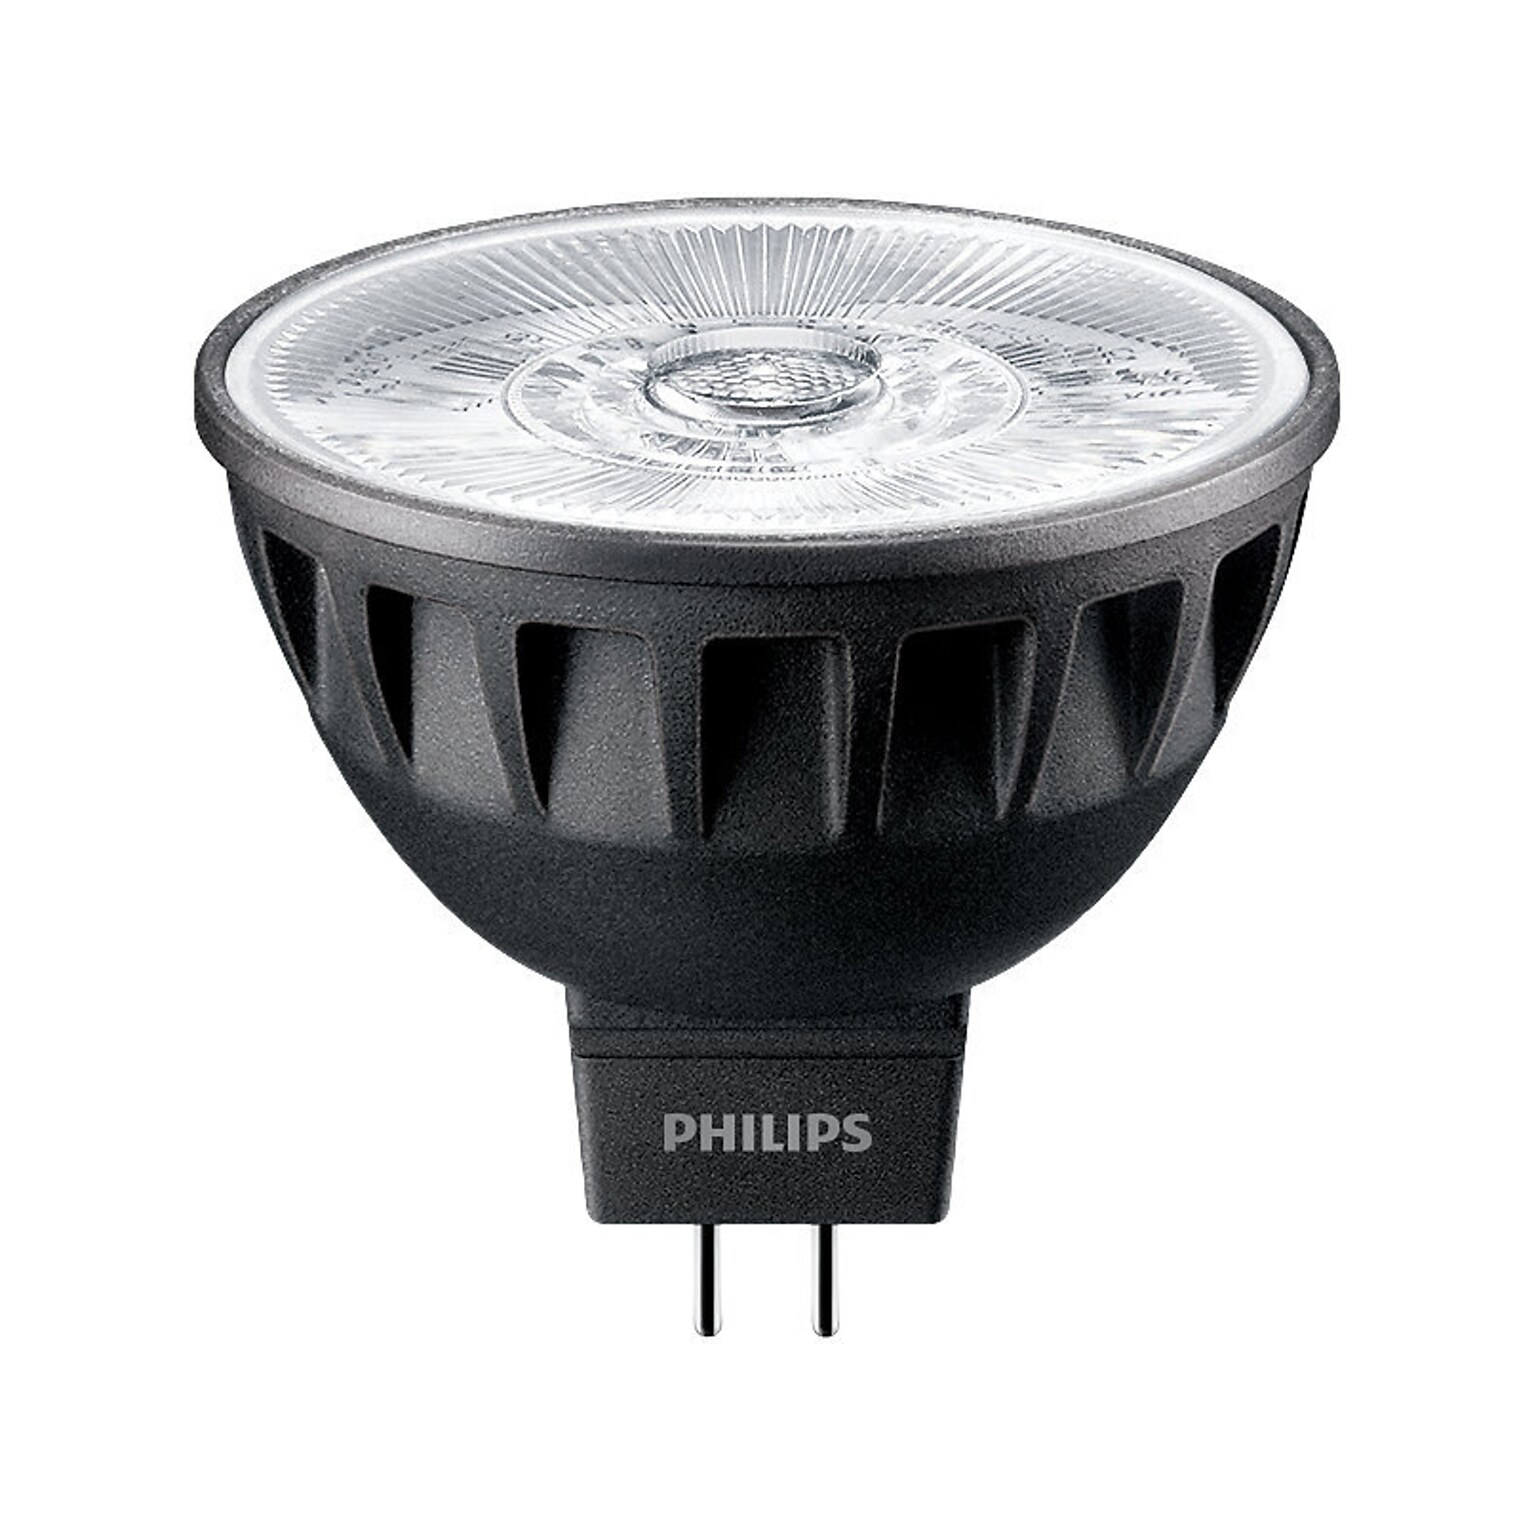 Philips 7.8-Watt White LED Spot Bulb, 10/Carton (573642)